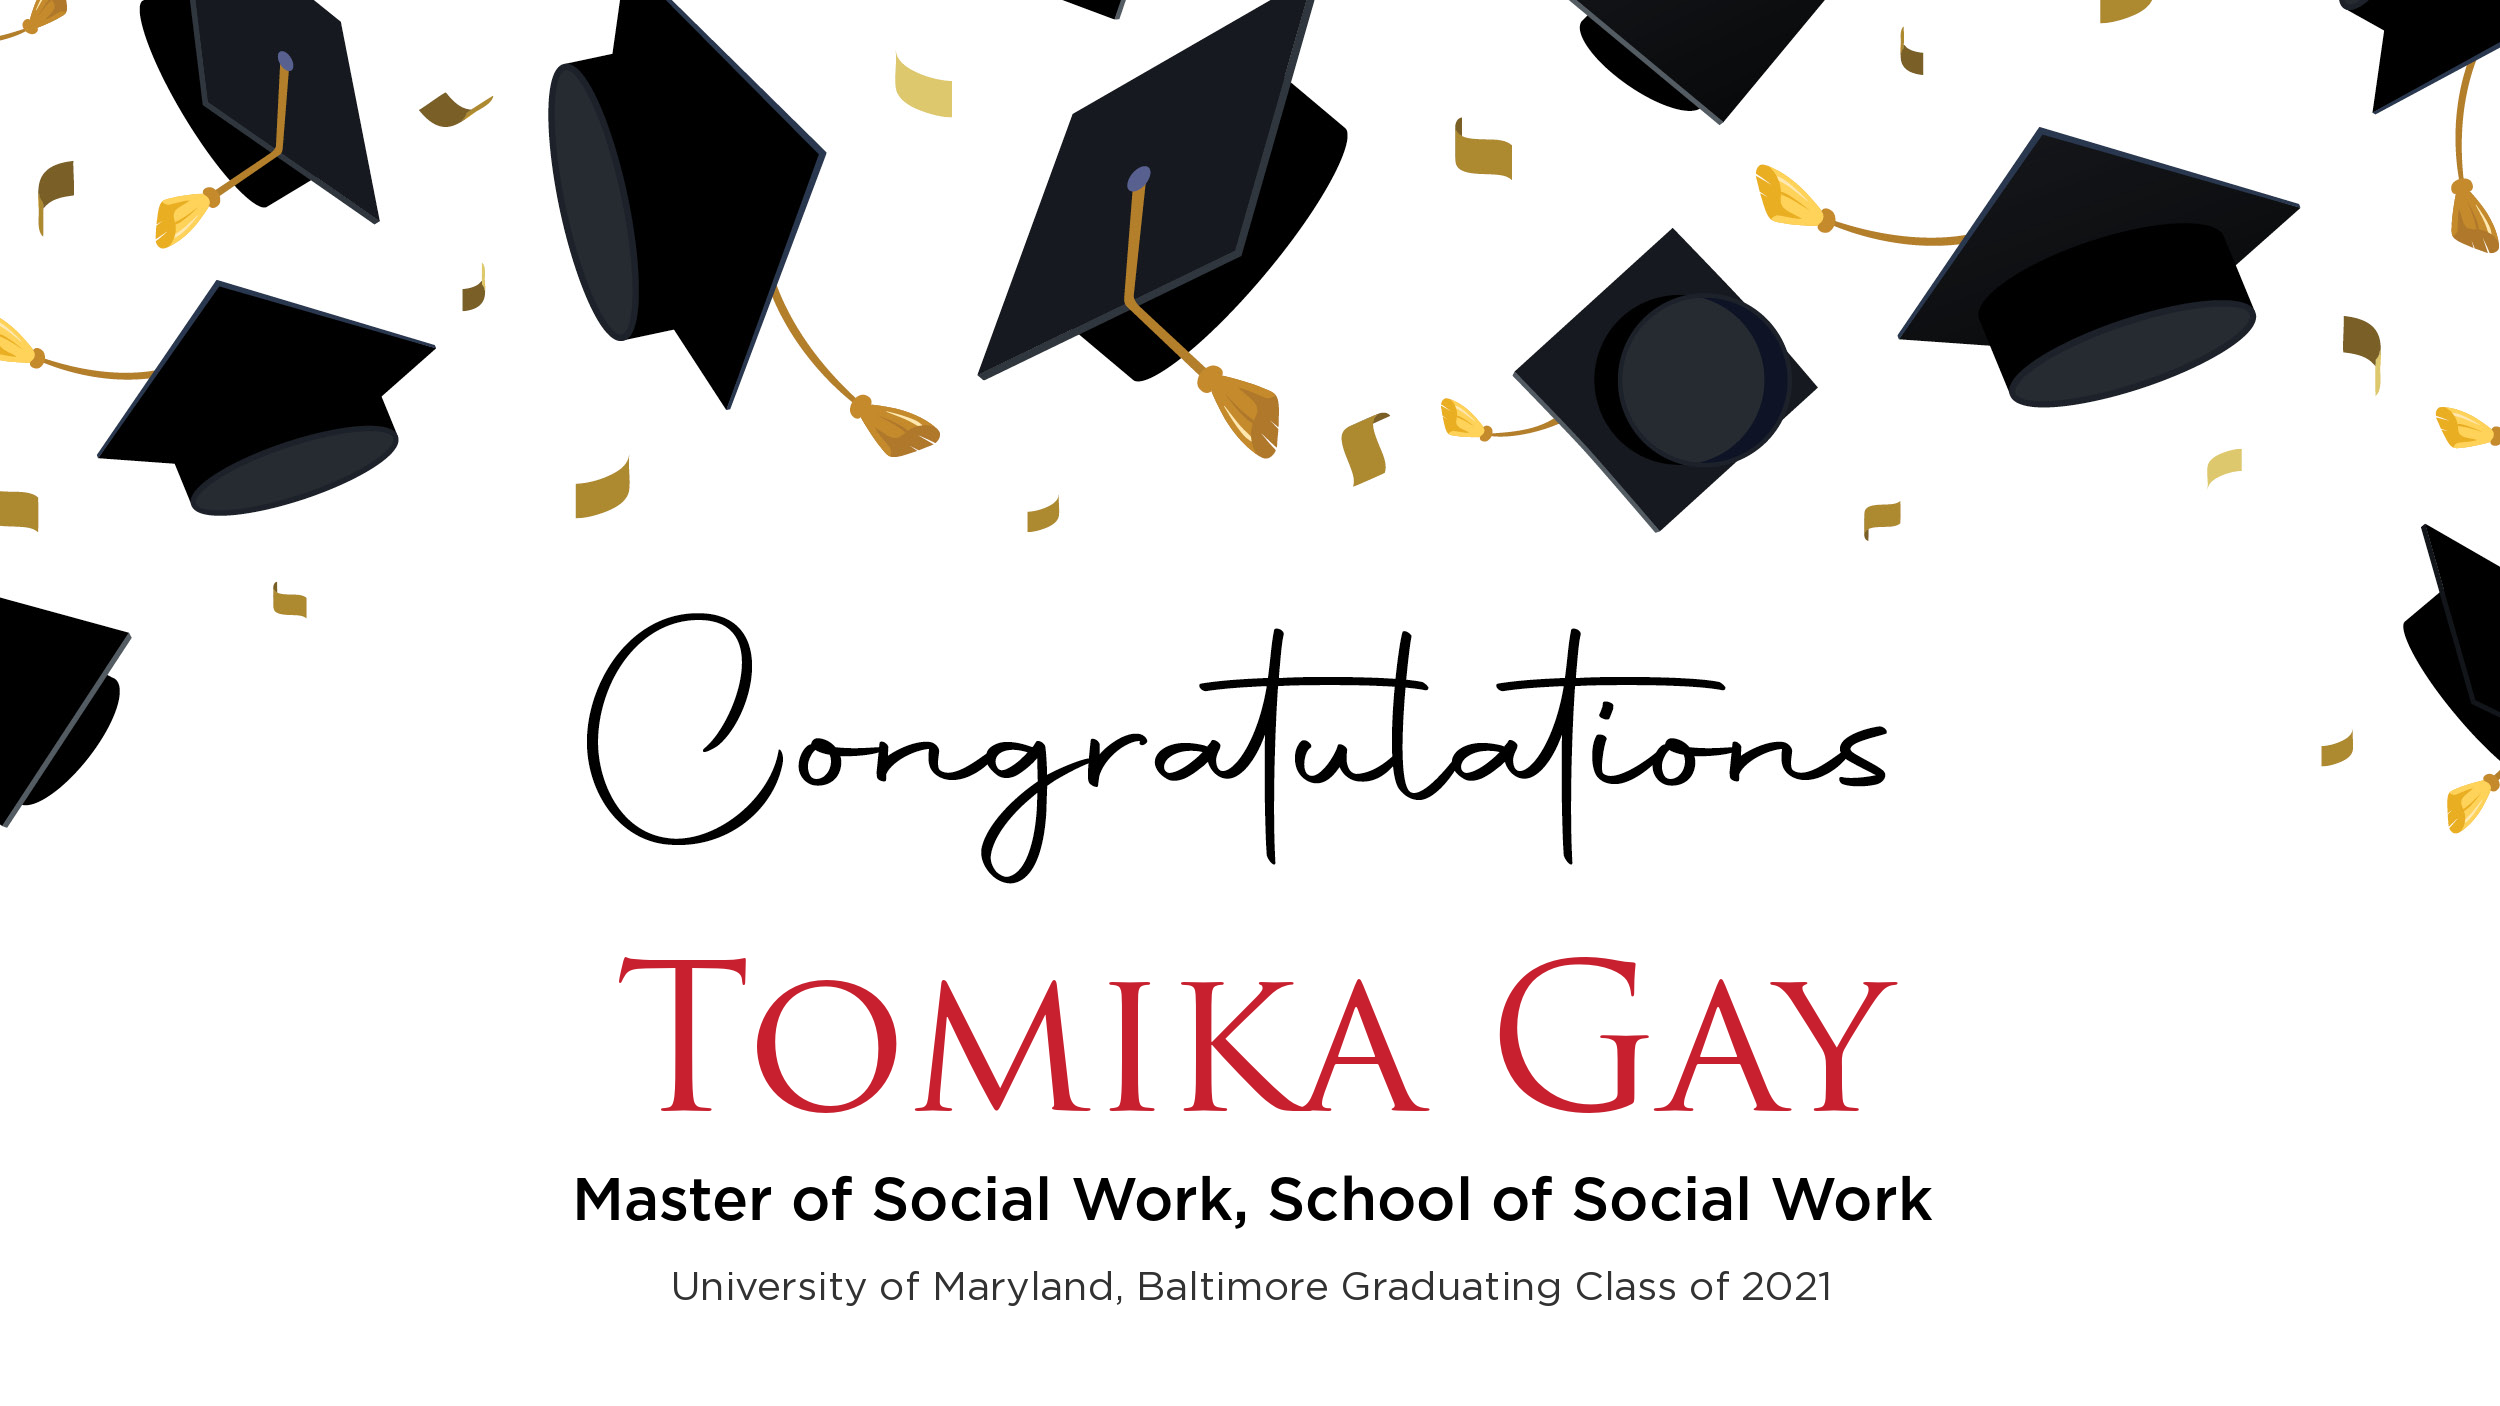 Congratulations Tomika Gay, Master of Social Work